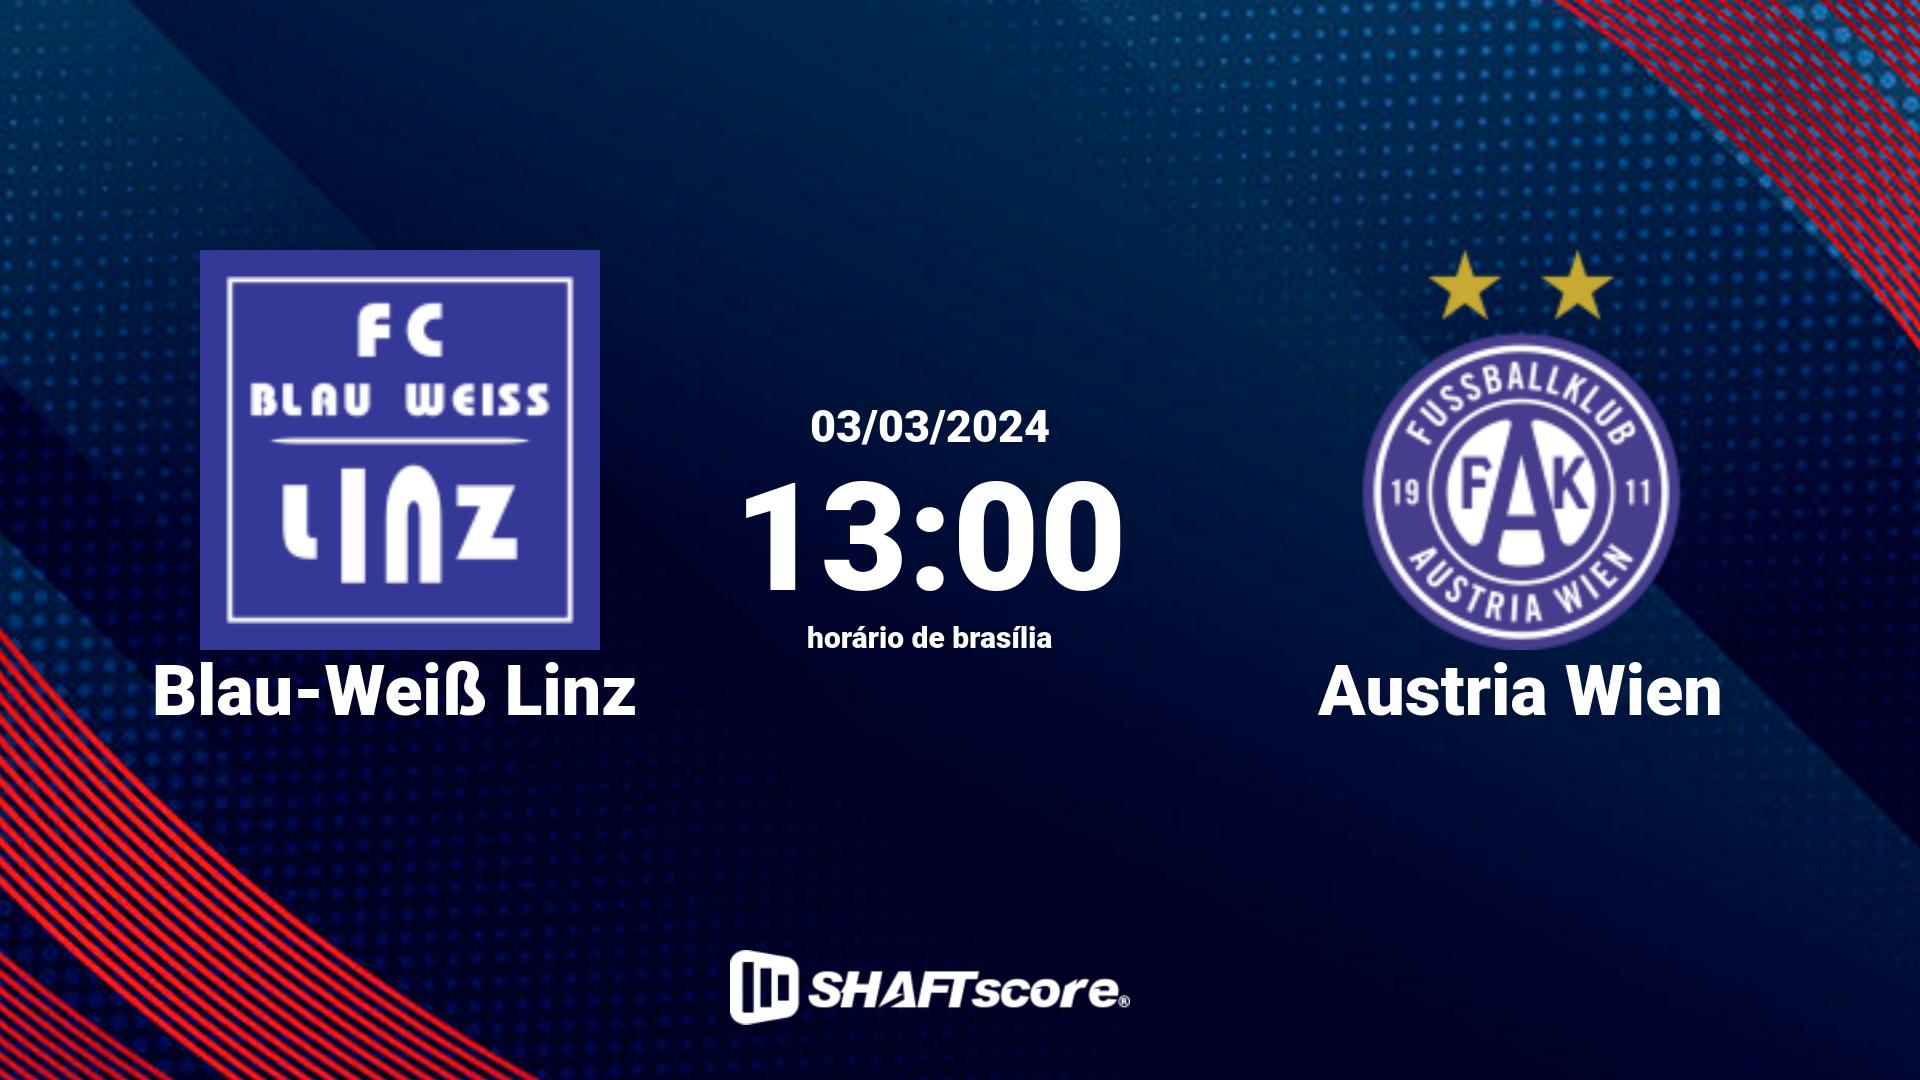 Estatísticas do jogo Blau-Weiß Linz vs Austria Wien 03.03 13:00